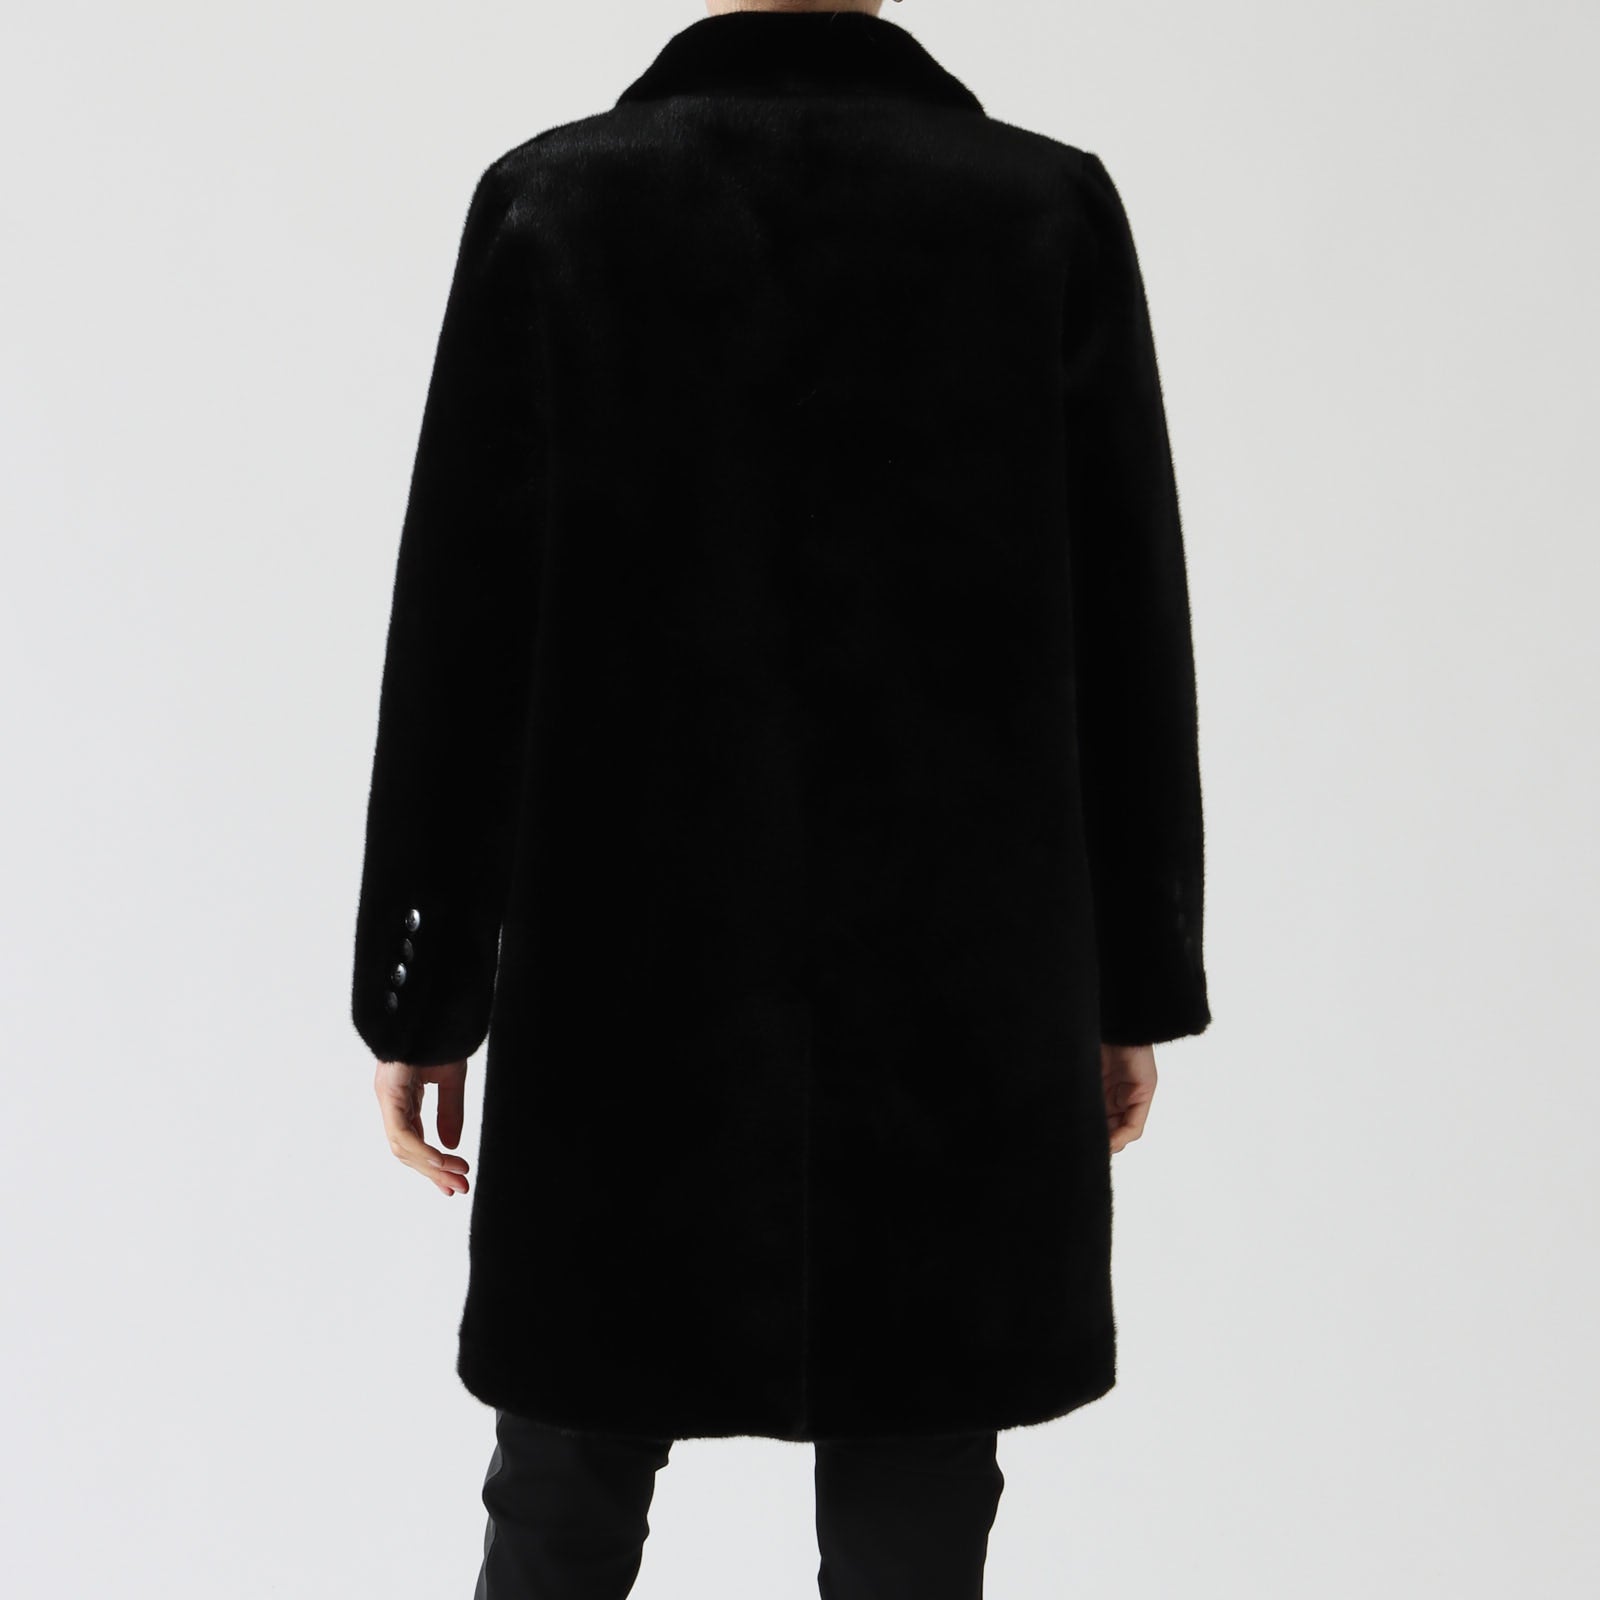 Mayla Black Faux Fur Coat